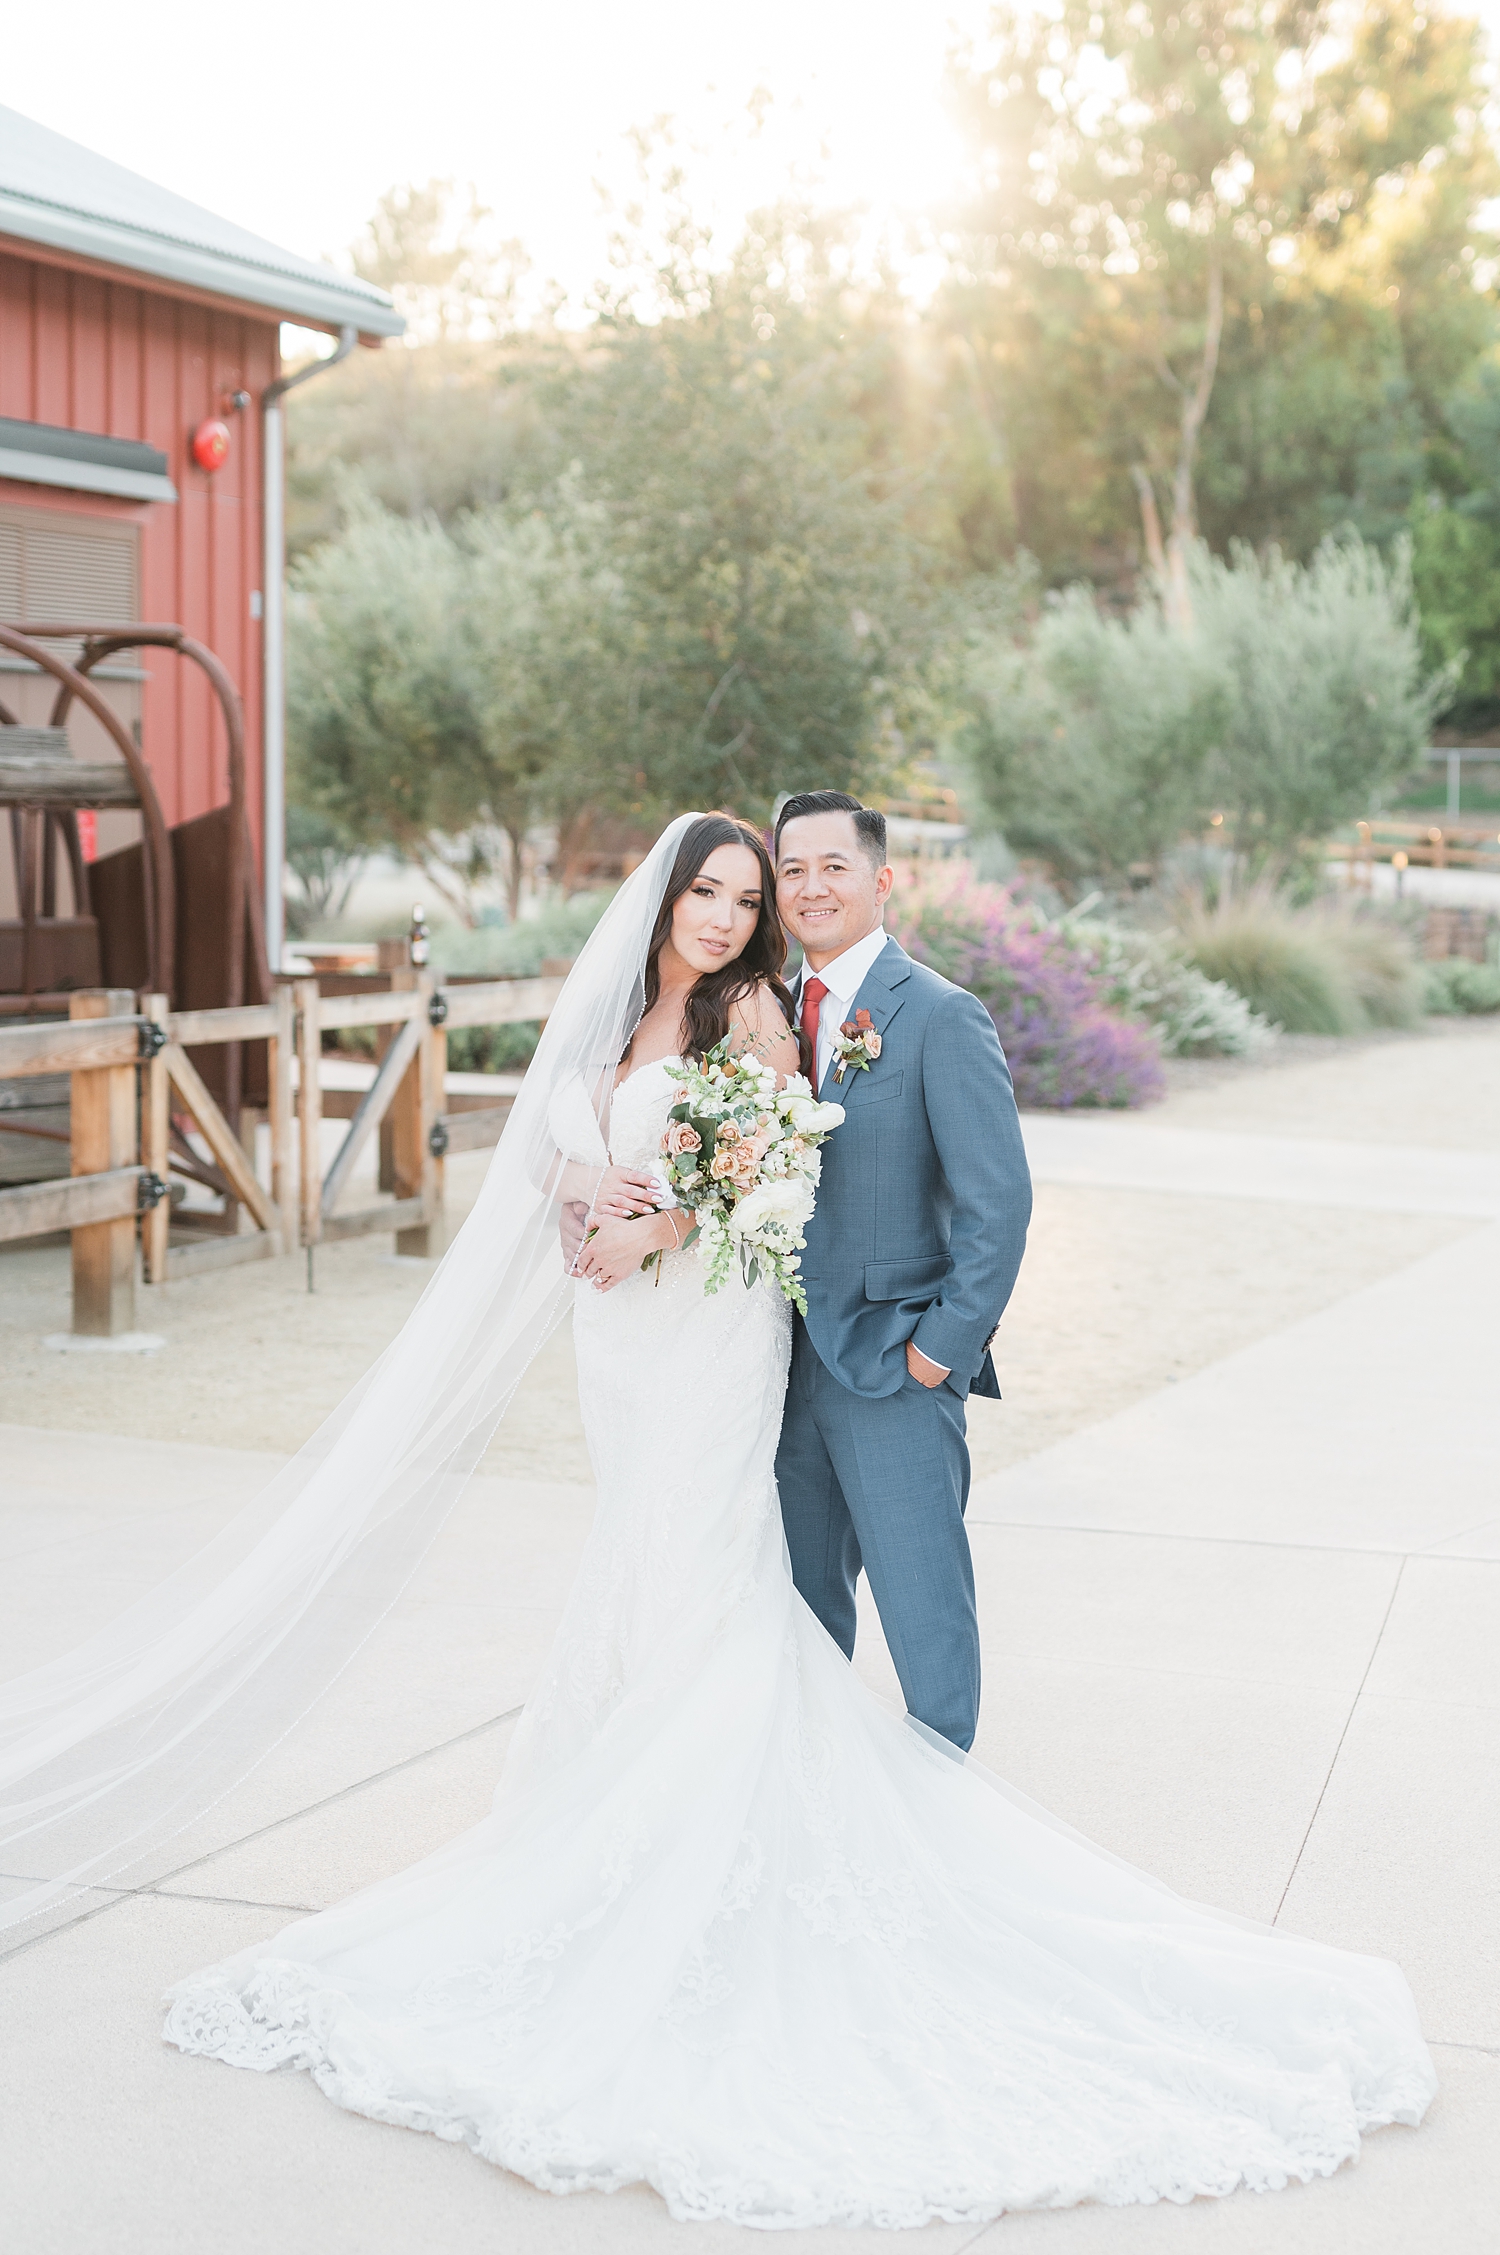 The Barn at Aliso Viejo Ranch | Orange County Wedding Photographer -106.jpg